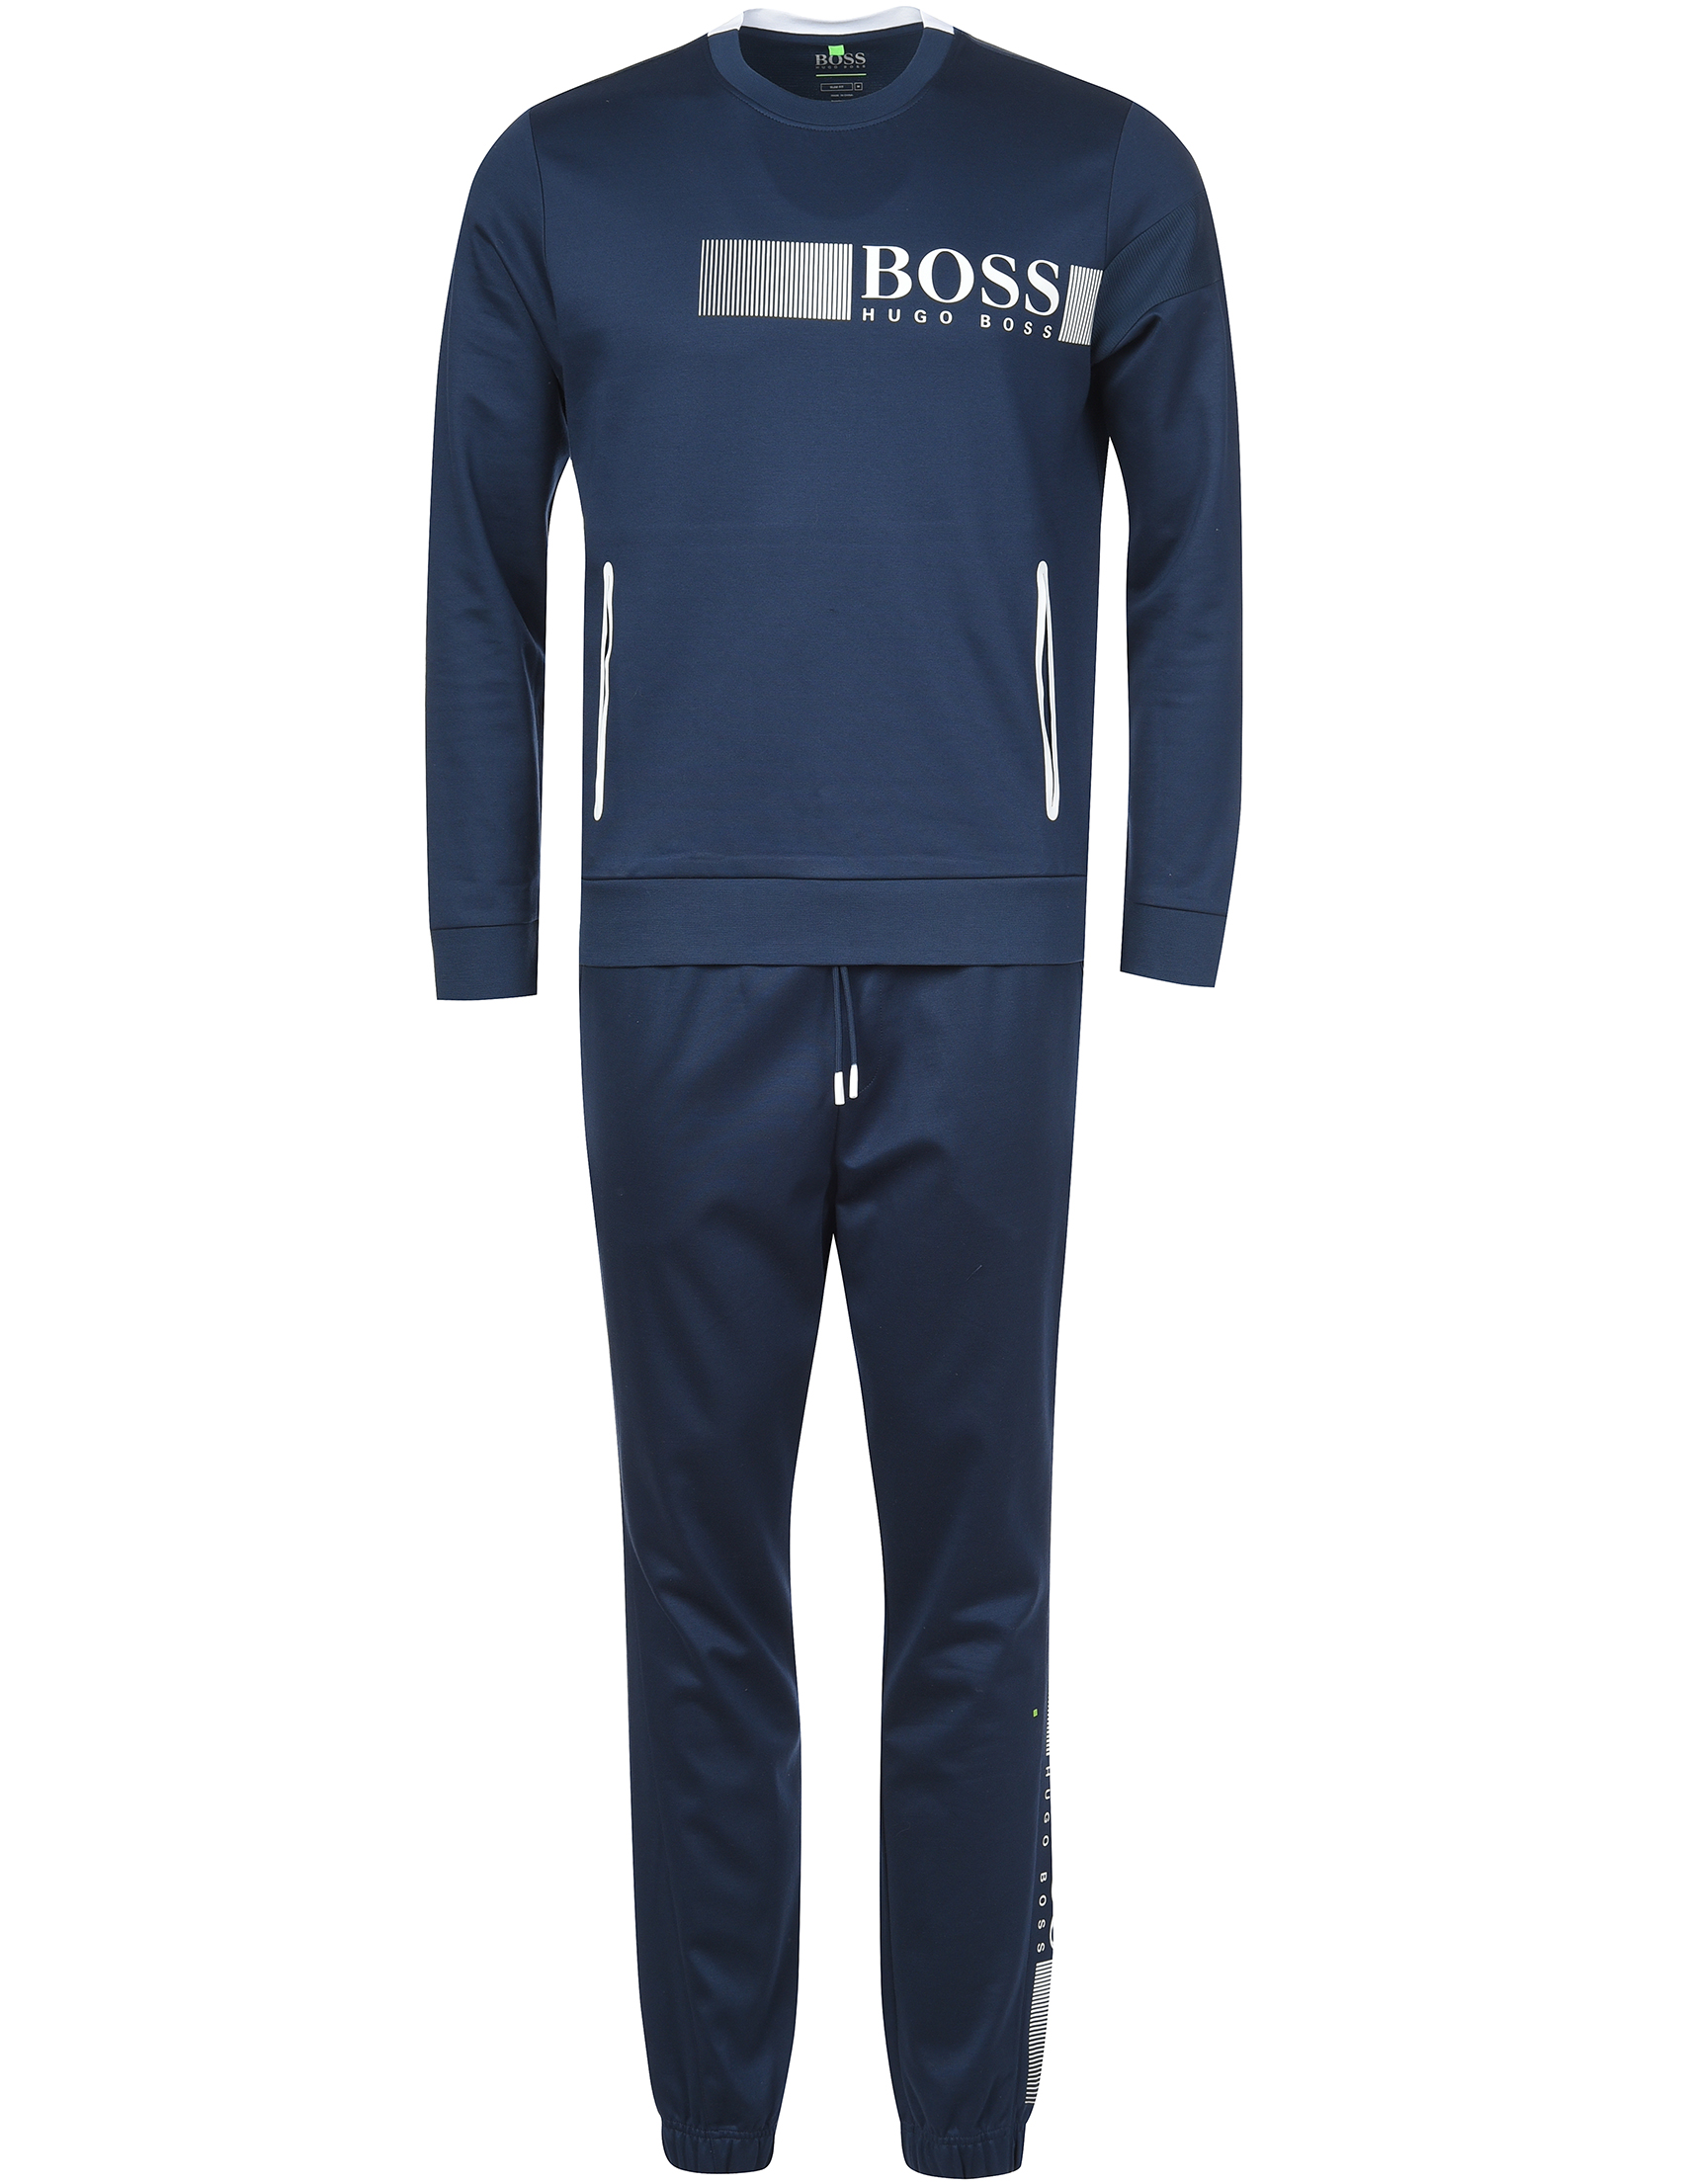 Спортивный костюм хуго босс. Спортивный костюм Boss Hugo Boss. Спортивный костюм Хуго босс мужской. Спортивный костюм Хьюго босс мужской. Темно-синий спортивный костюм Hugo Boss 9072-2.